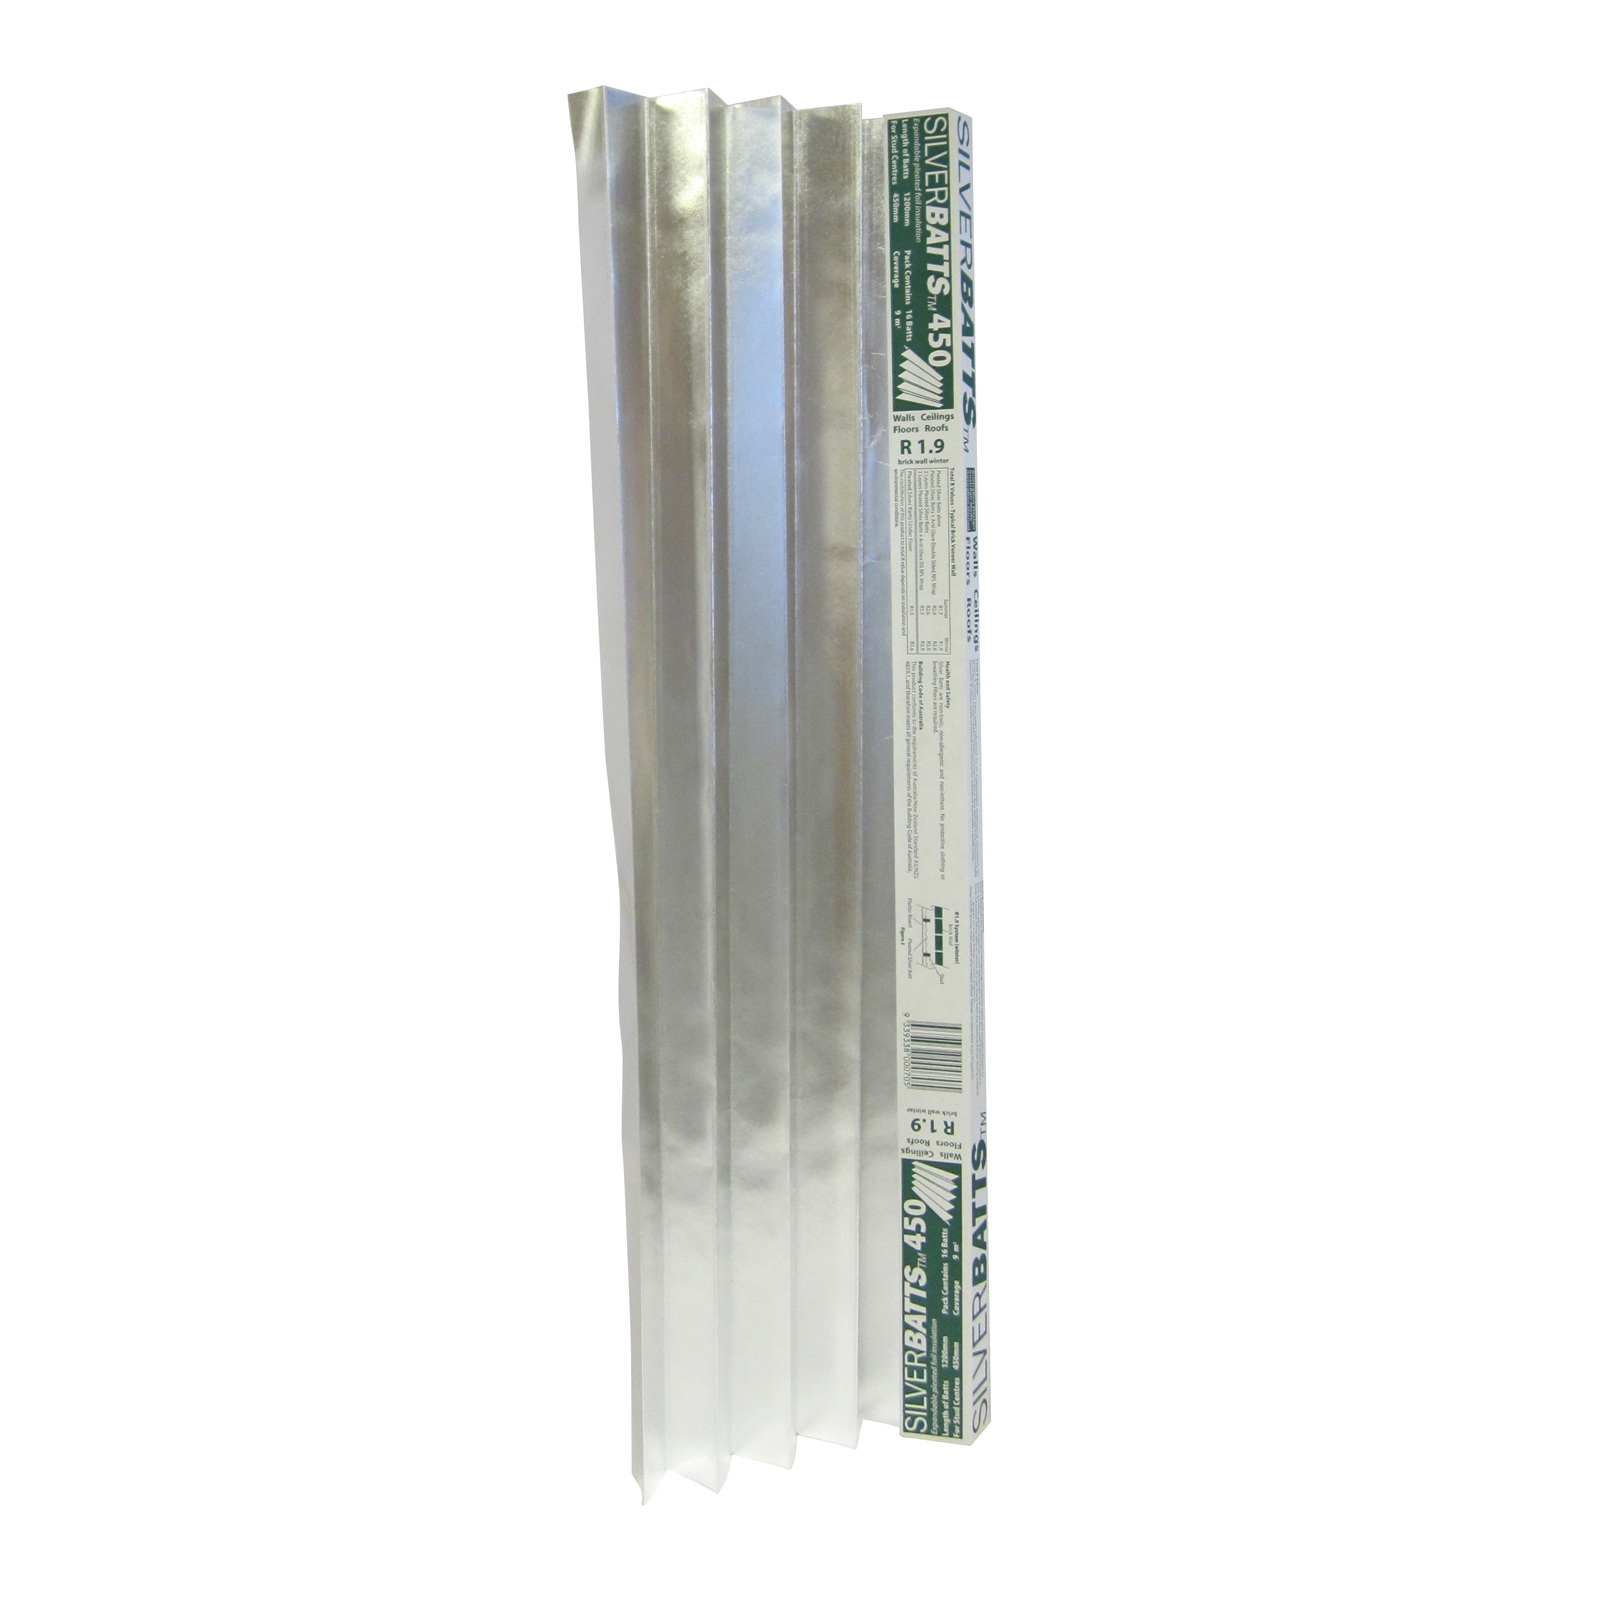 Ametalin 1200 x 450mm Pleated SilverBatts™ Insulation - 16 Pack